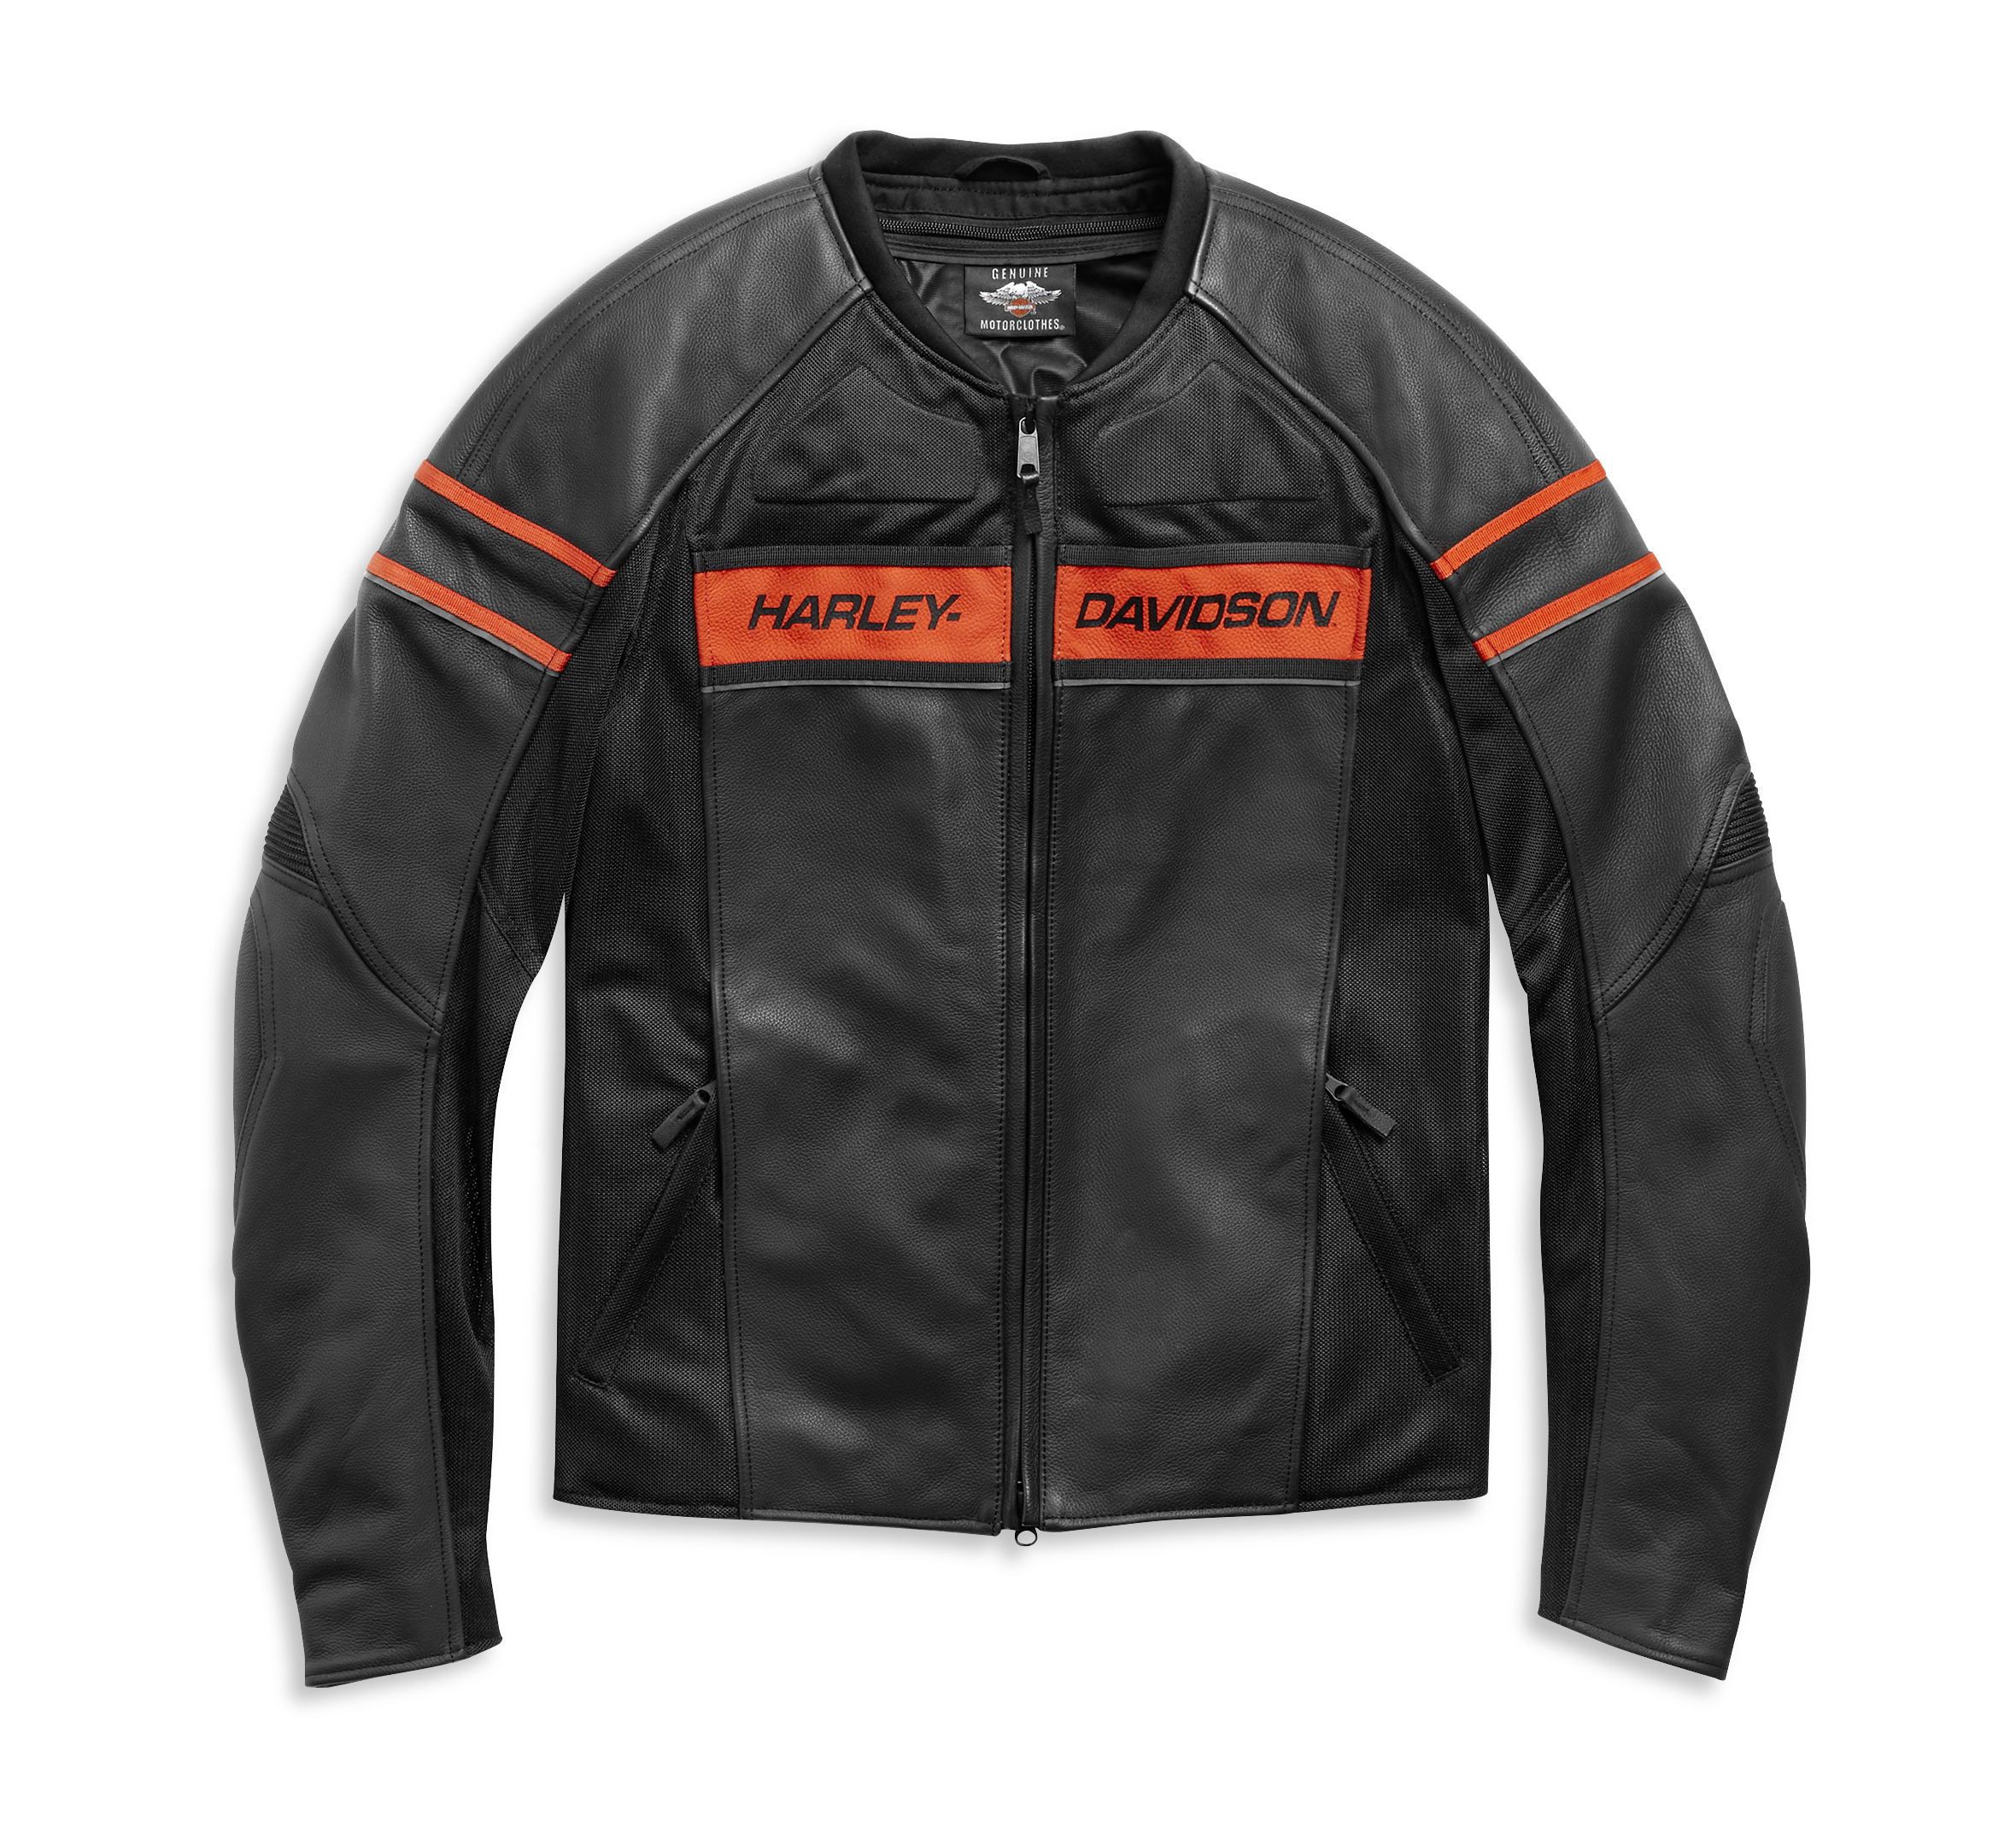 Harley Davidson CLASSIC CRUISER Leather Jacket Black Gray 98140